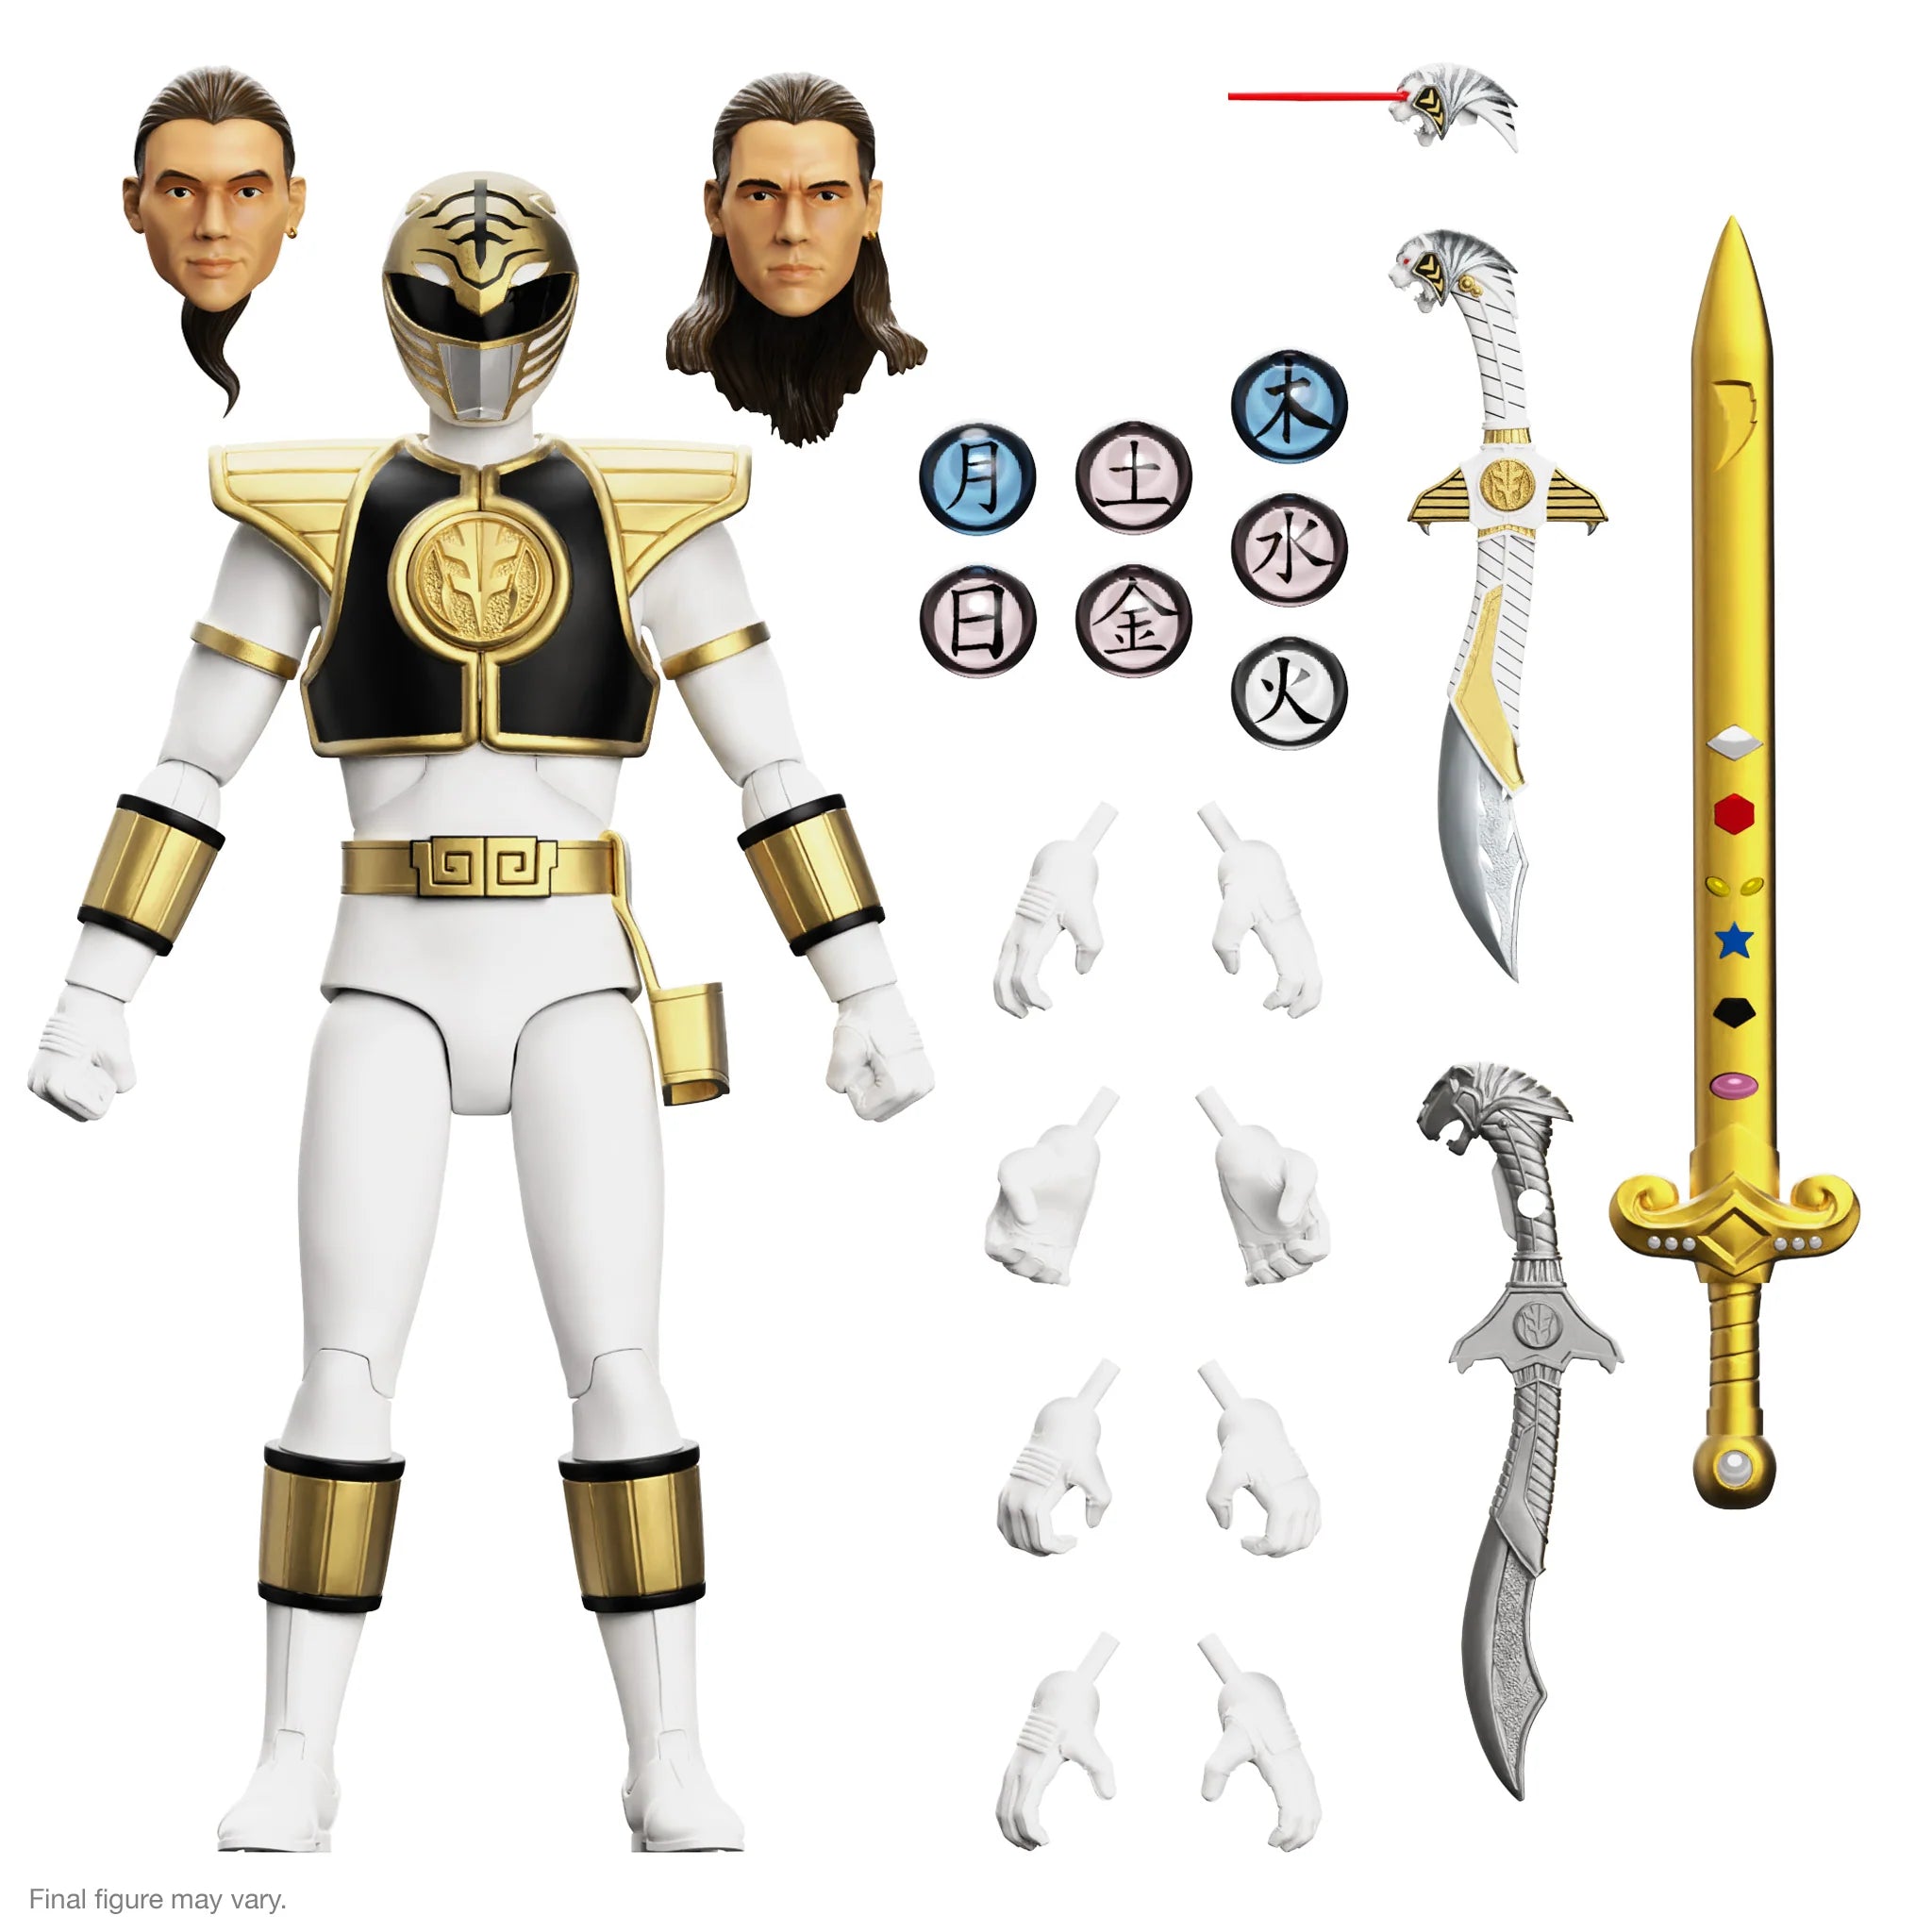 Super7 - Mighty Morphin Power Rangers ULTIMATES! - Wave 4 - White Ranger - Marvelous Toys